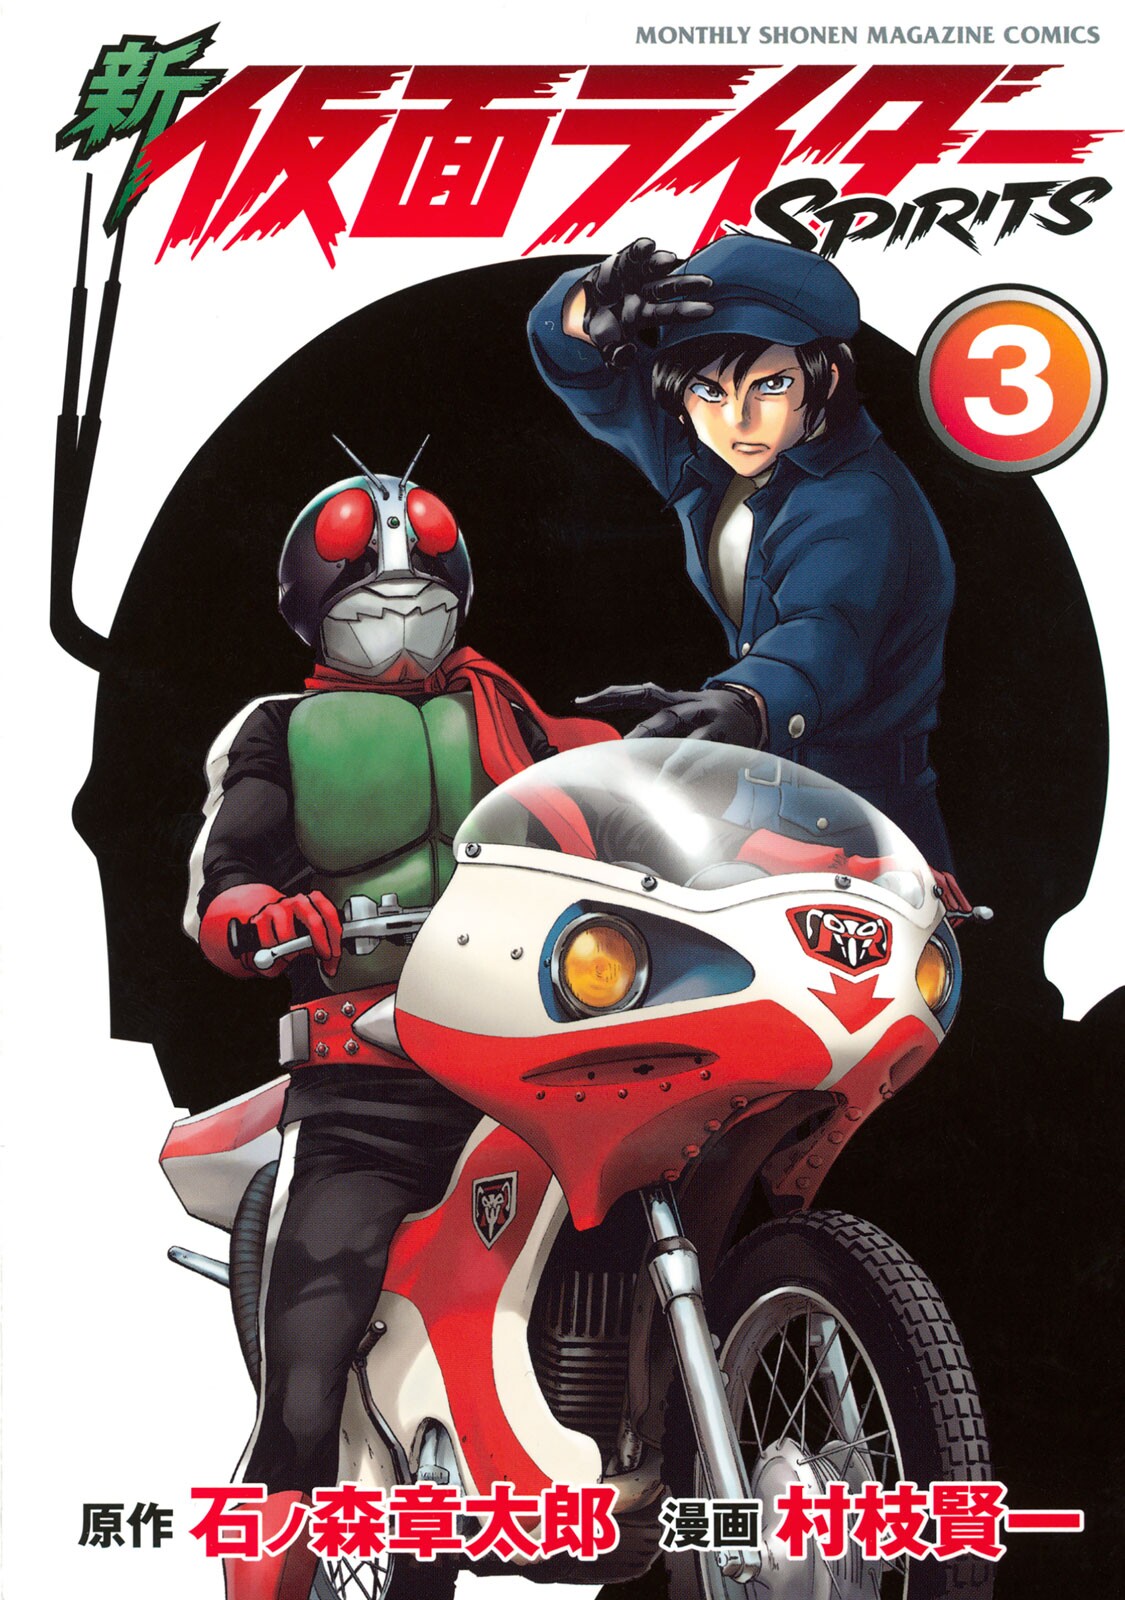 Shin Kamen Rider Spirits cover 71